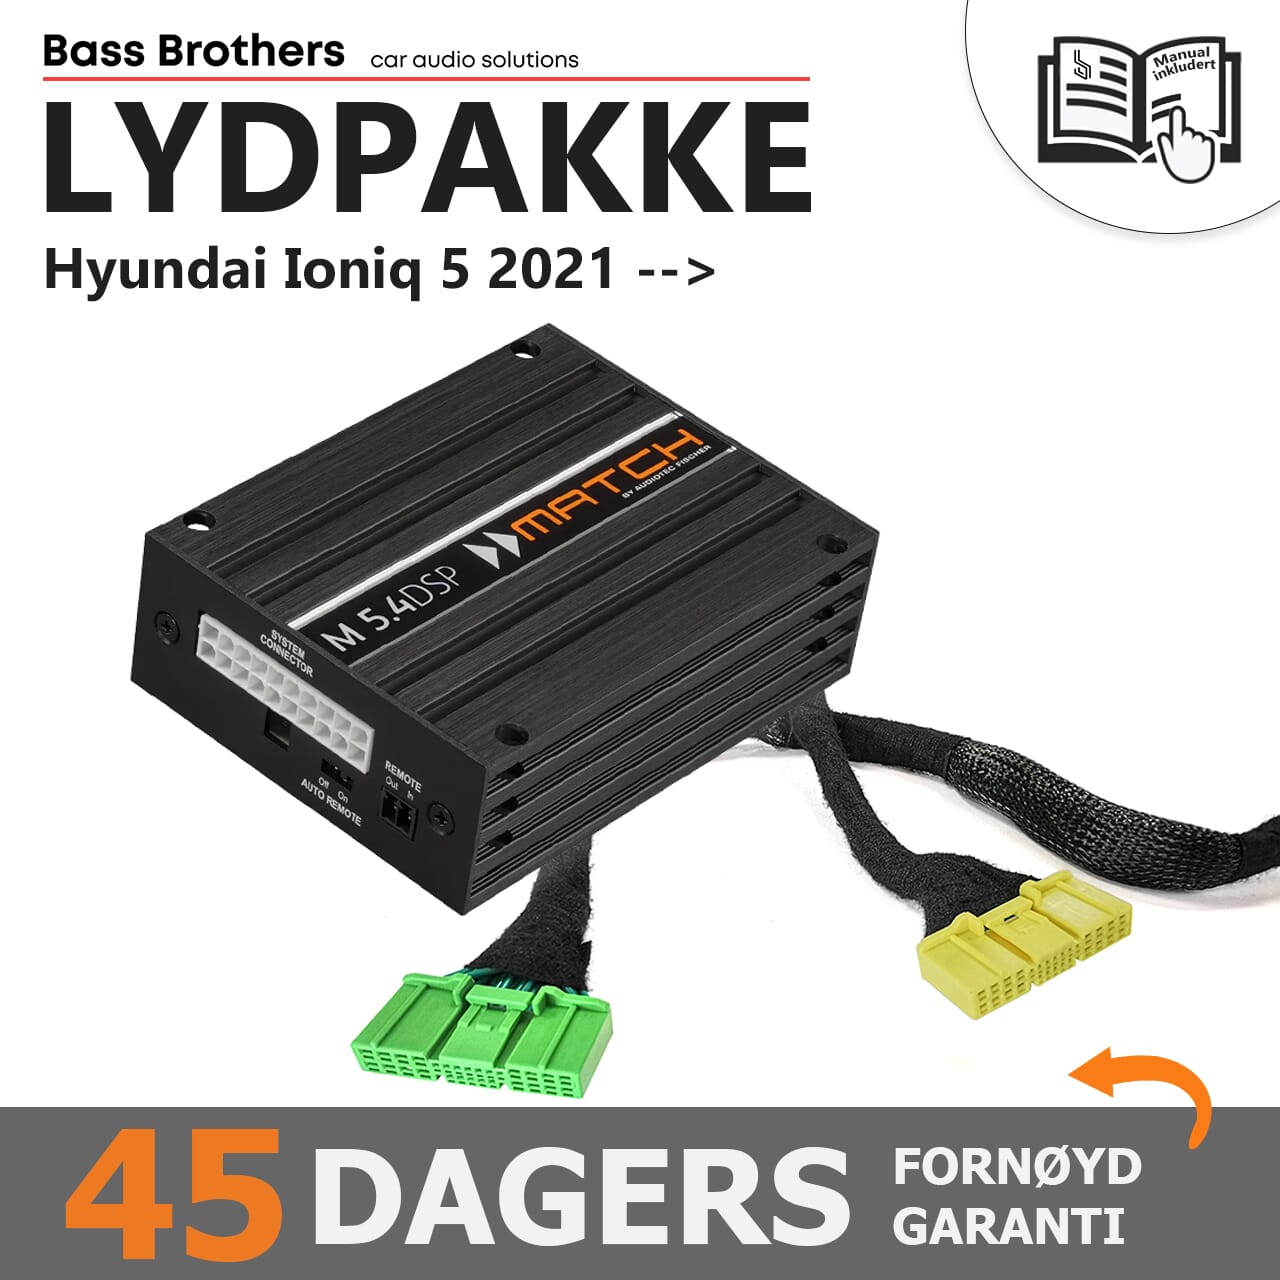 Lydoppgraderingspakke for Hyundai IONIQ 5